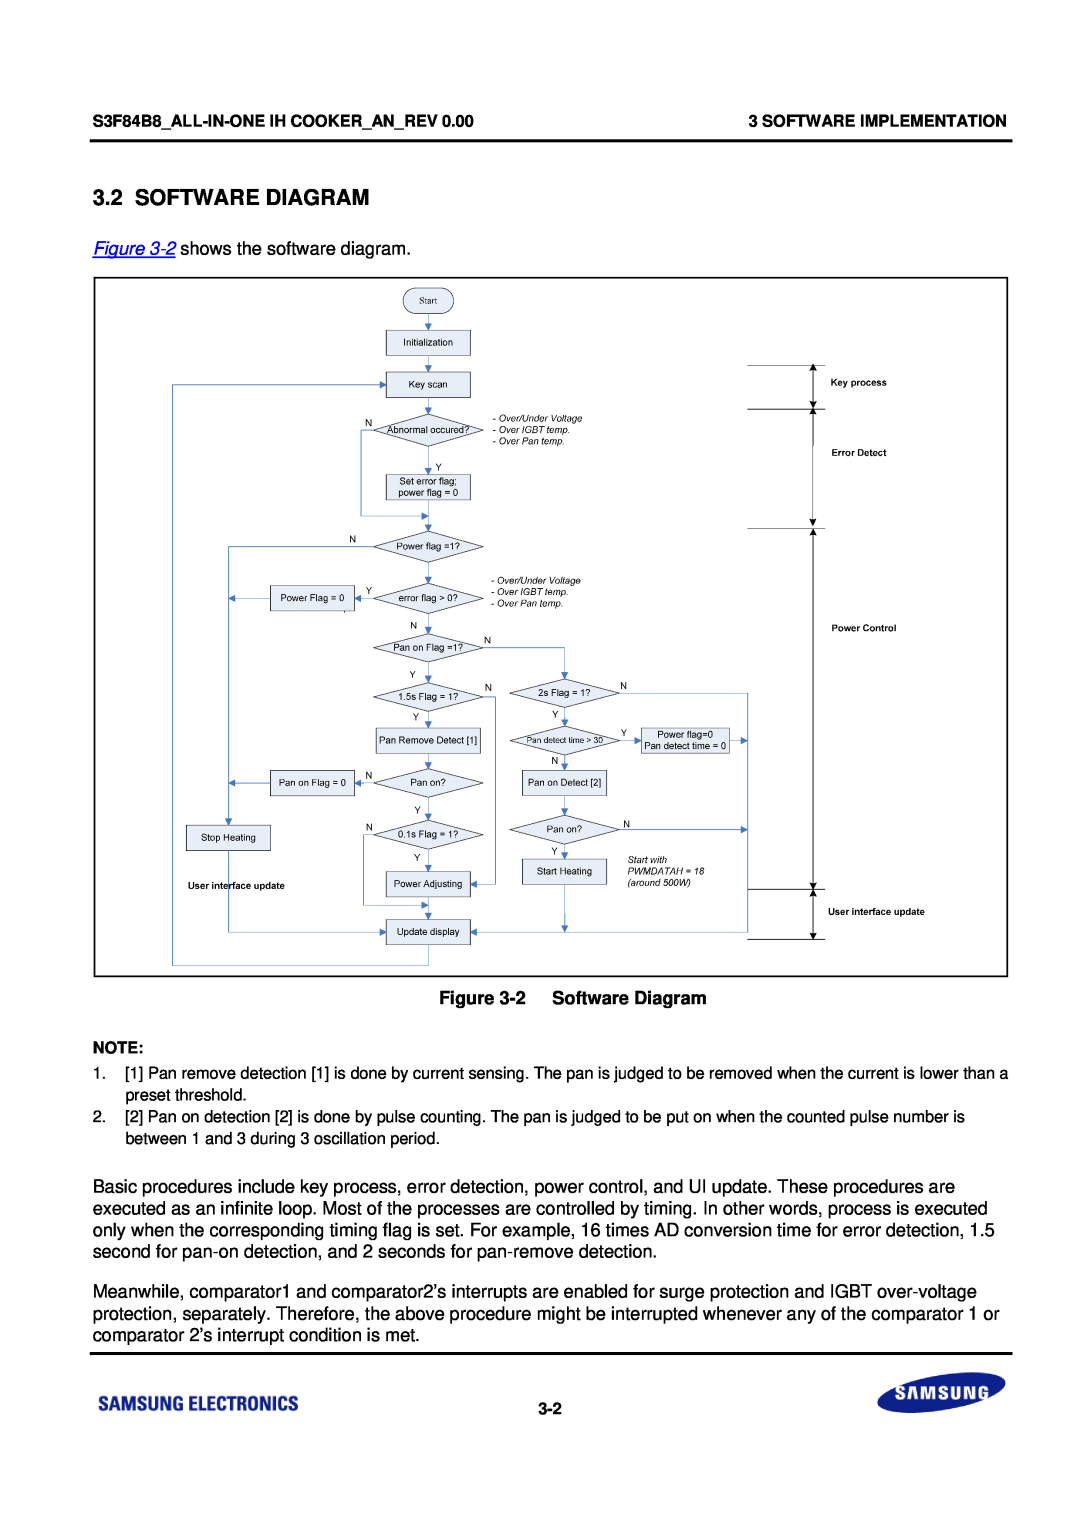 Samsung S3F84B8 manual 2 Software Diagram 